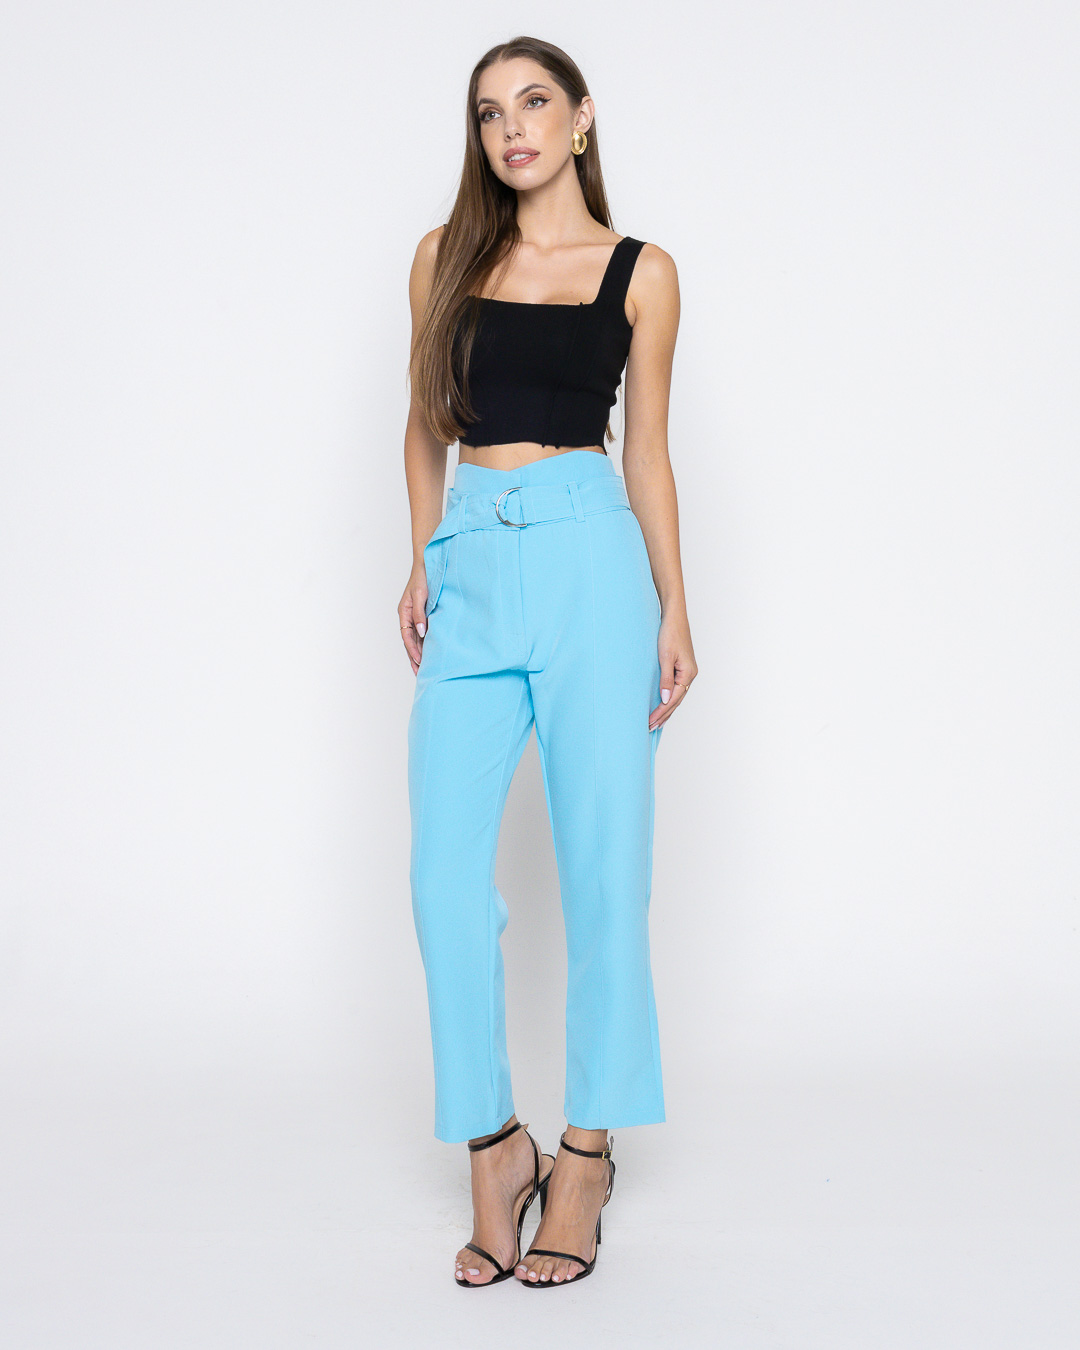 Dot Clothing - Pants Dot Clothing Tailor Blue - 1682AZUL